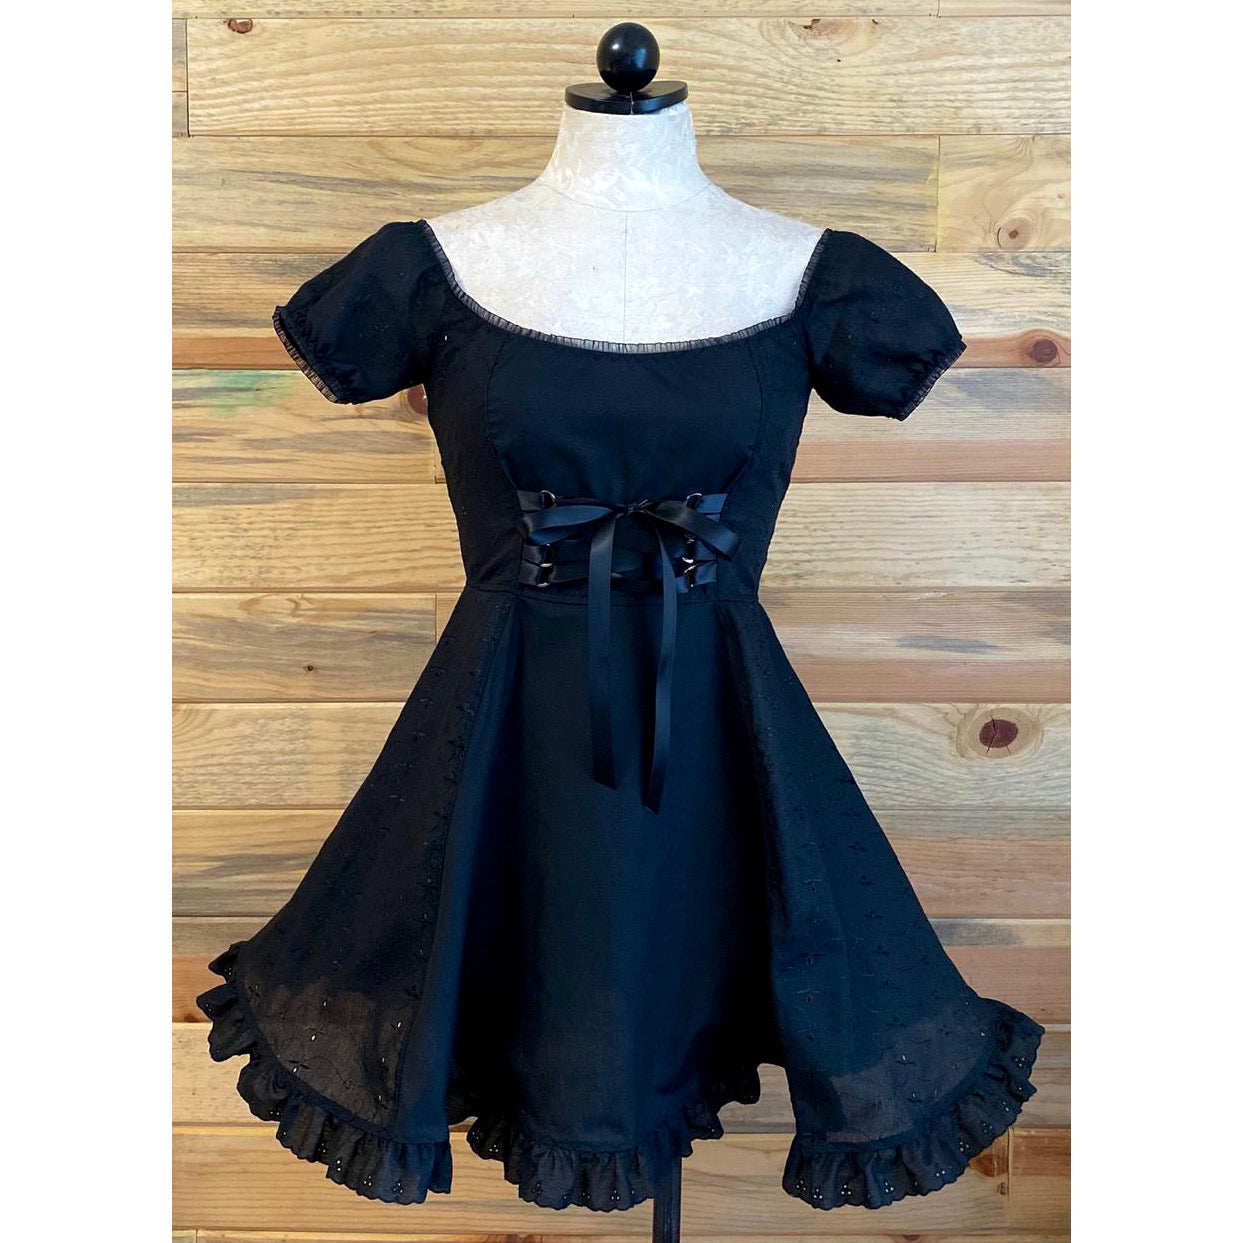 The Cotton Eyelet Tori Barmaid Dress in Black